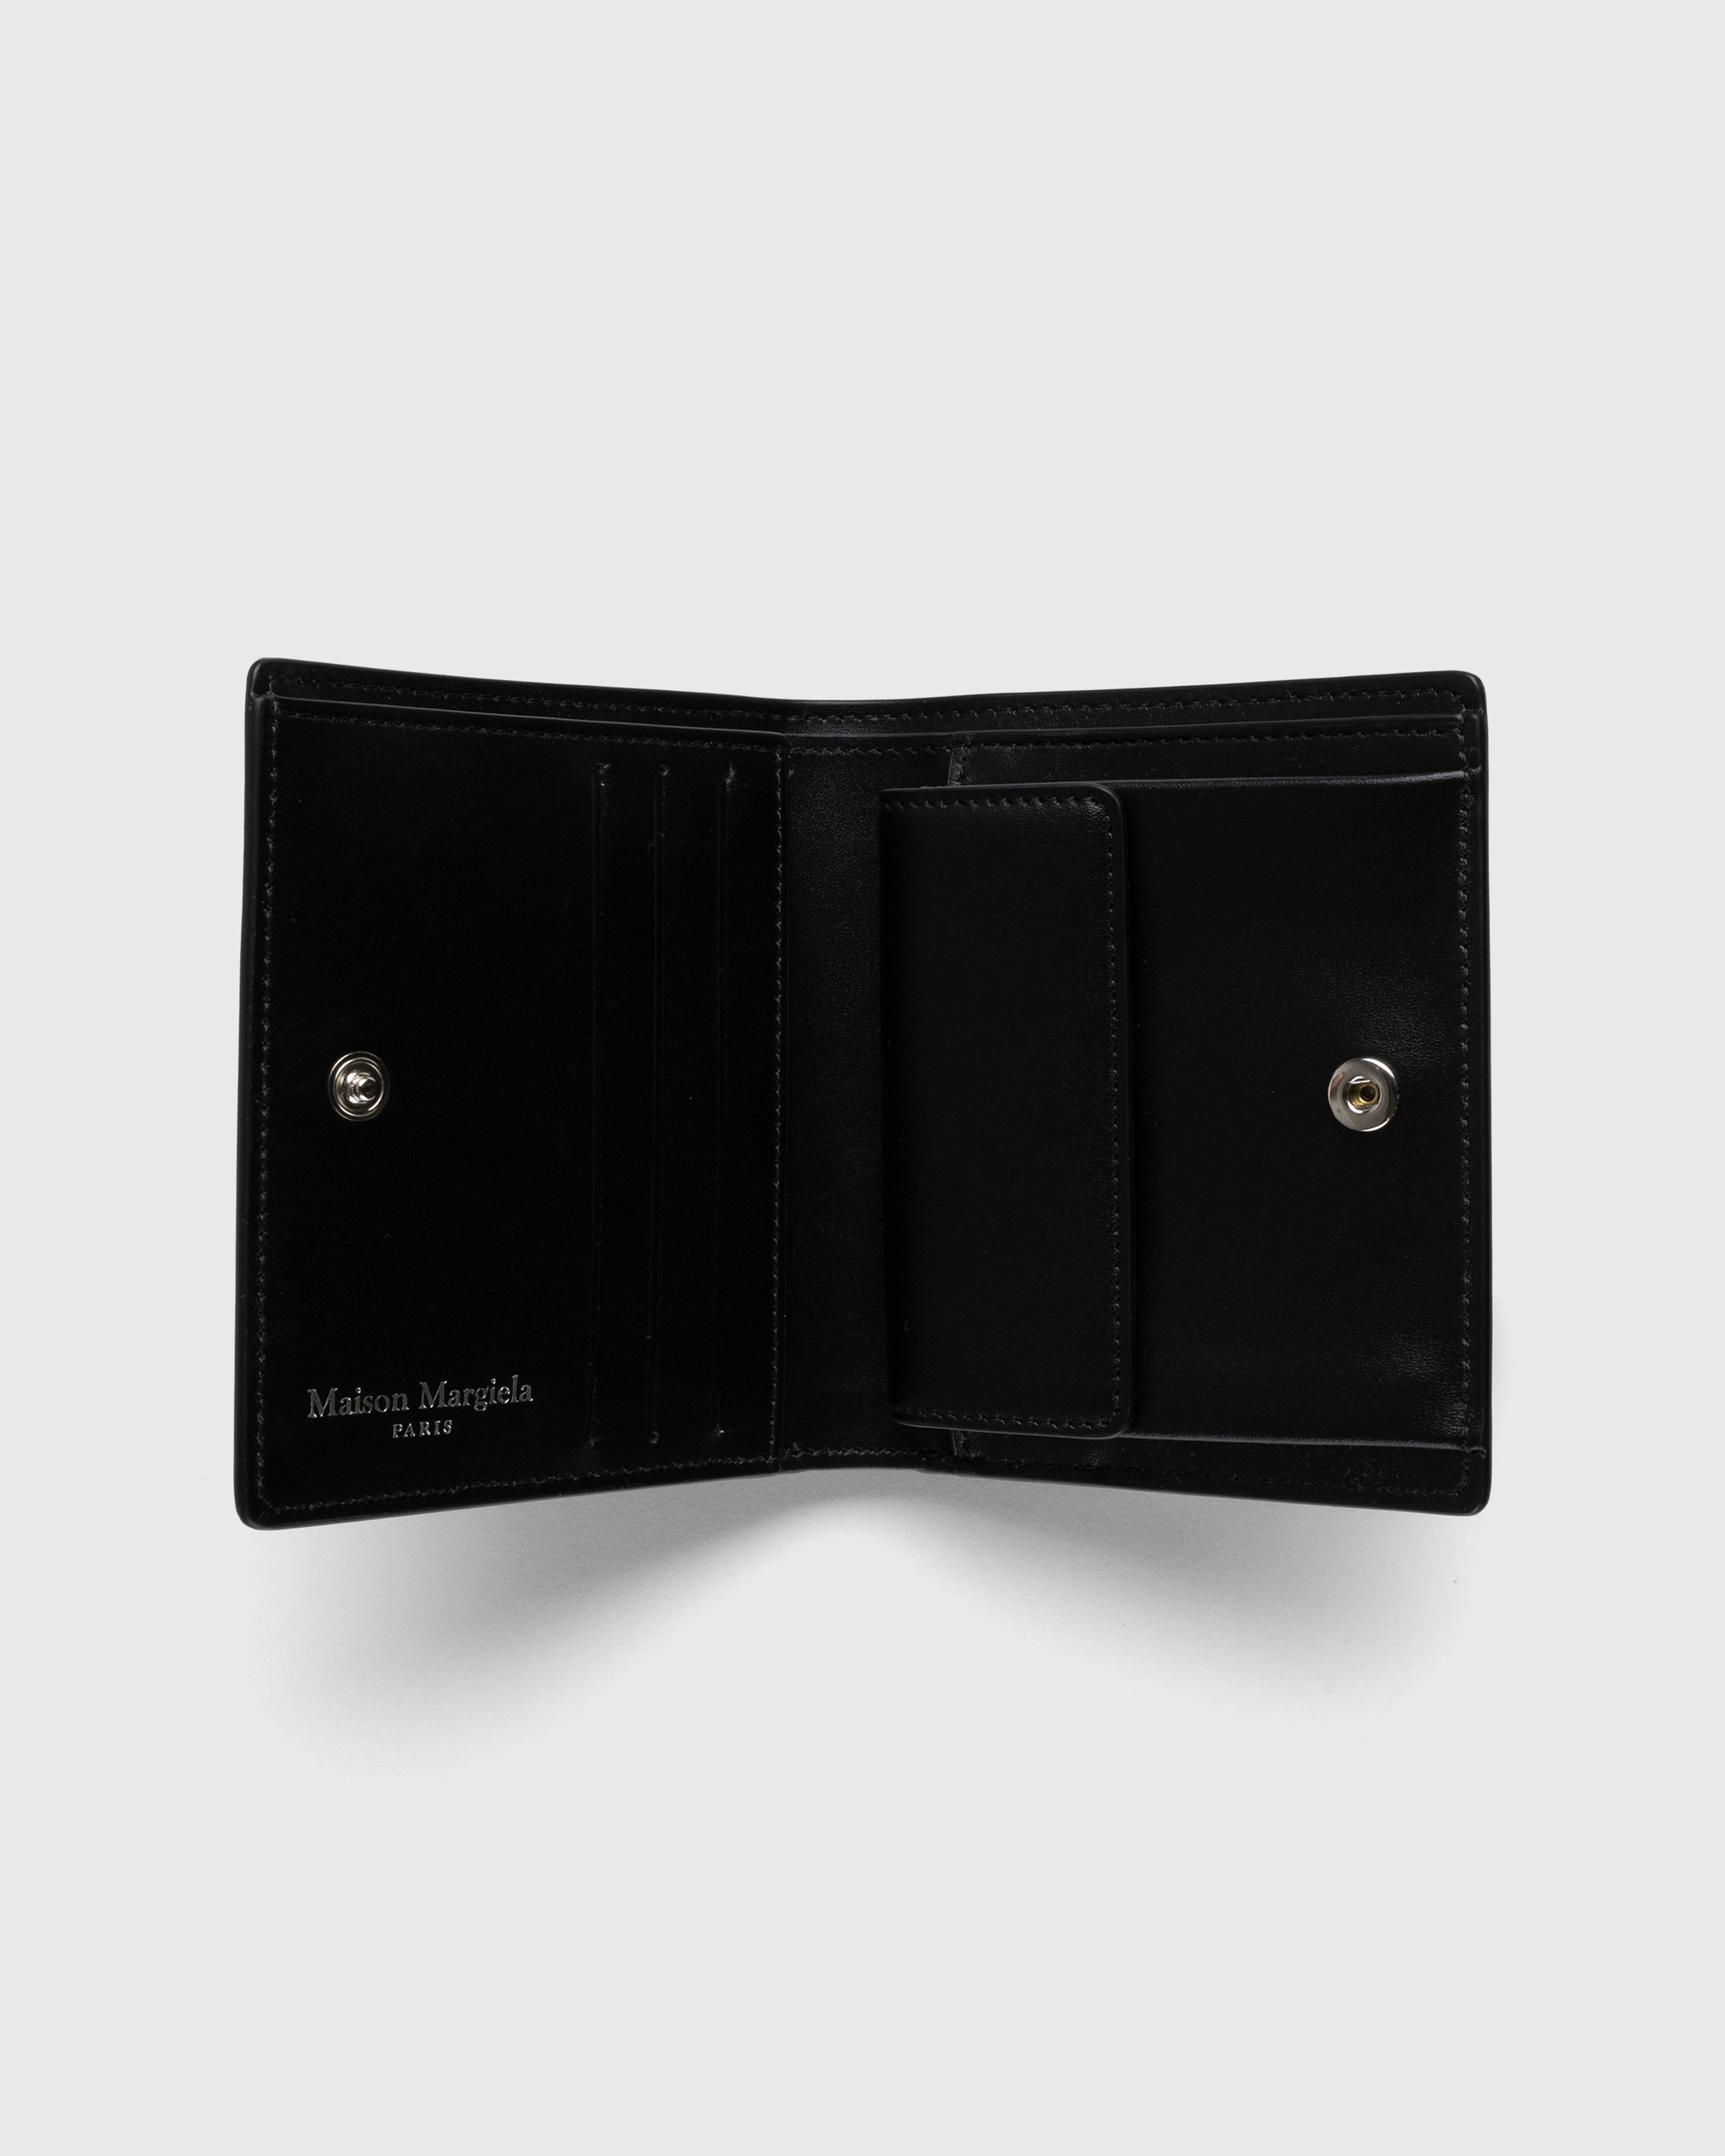 Maison Margiela - Leather Bifold Wallet Black - Accessories - Black - Image 3